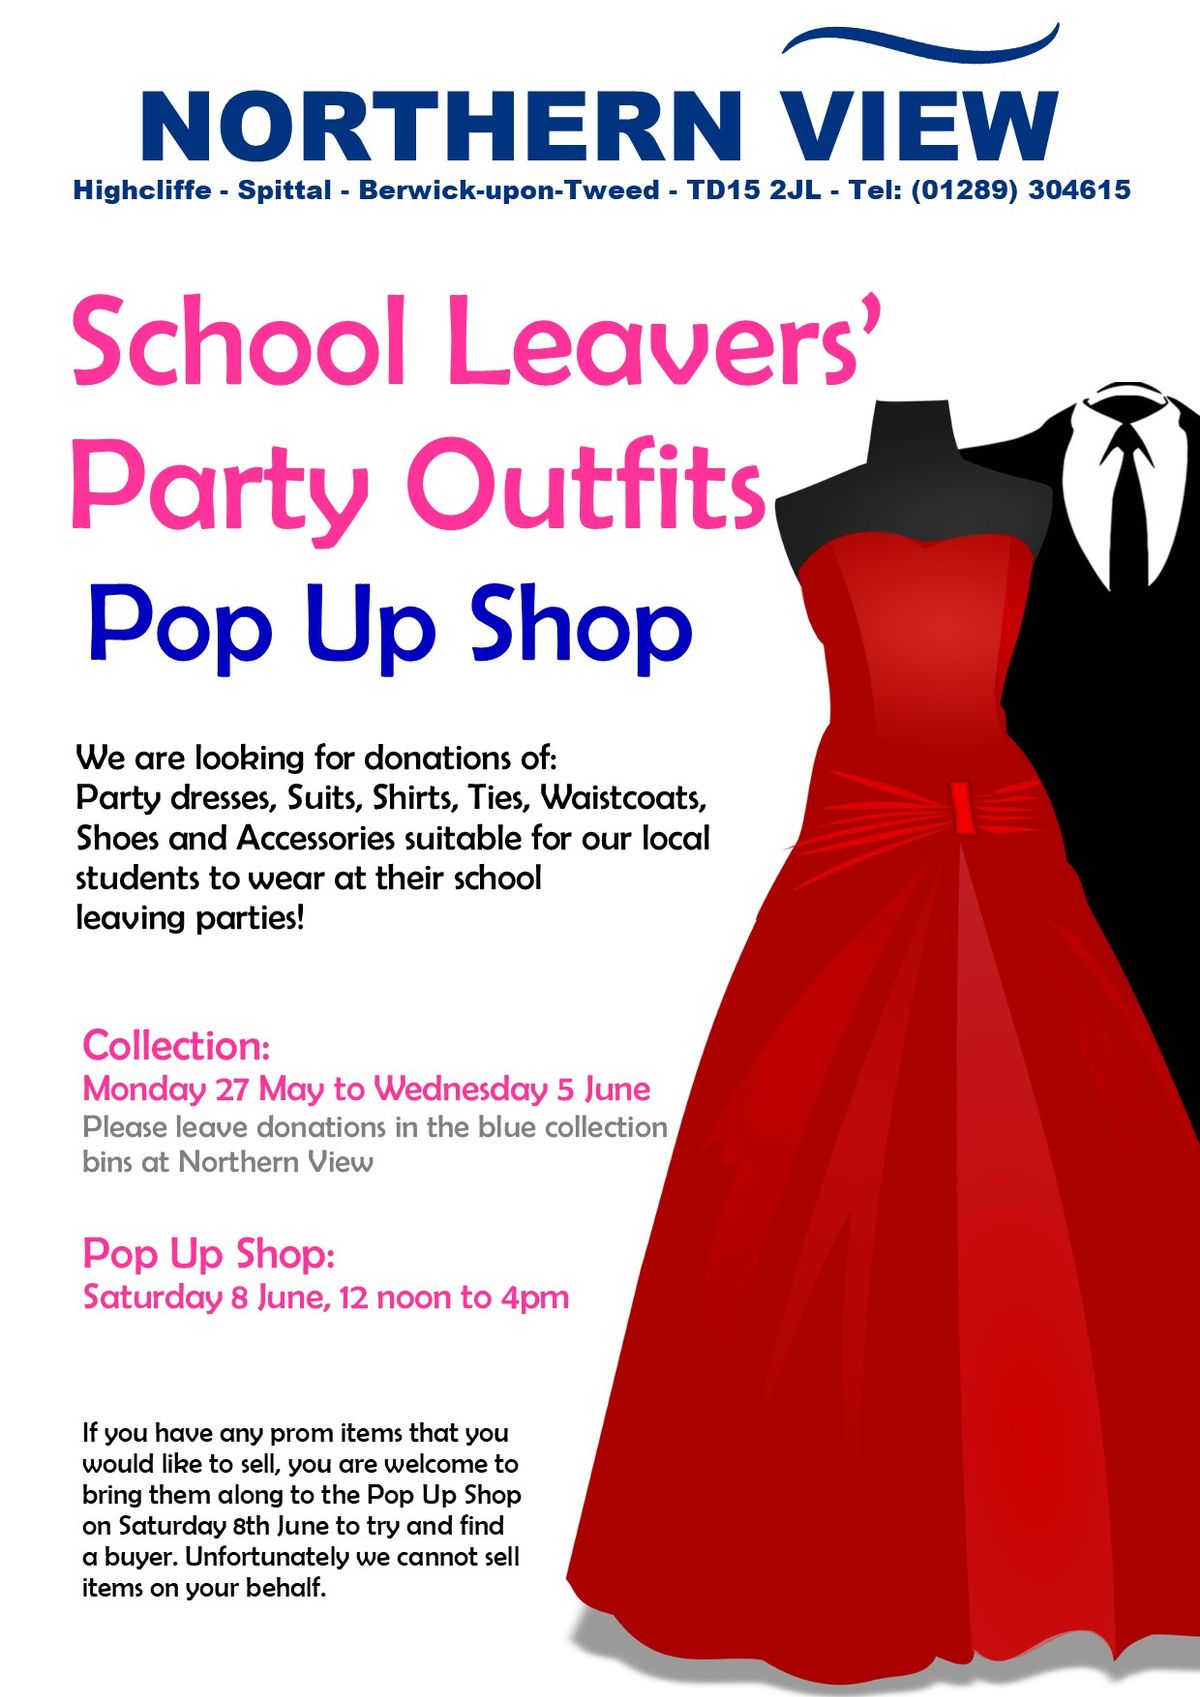 School Leavers Party Outfits: Pop Up Shop